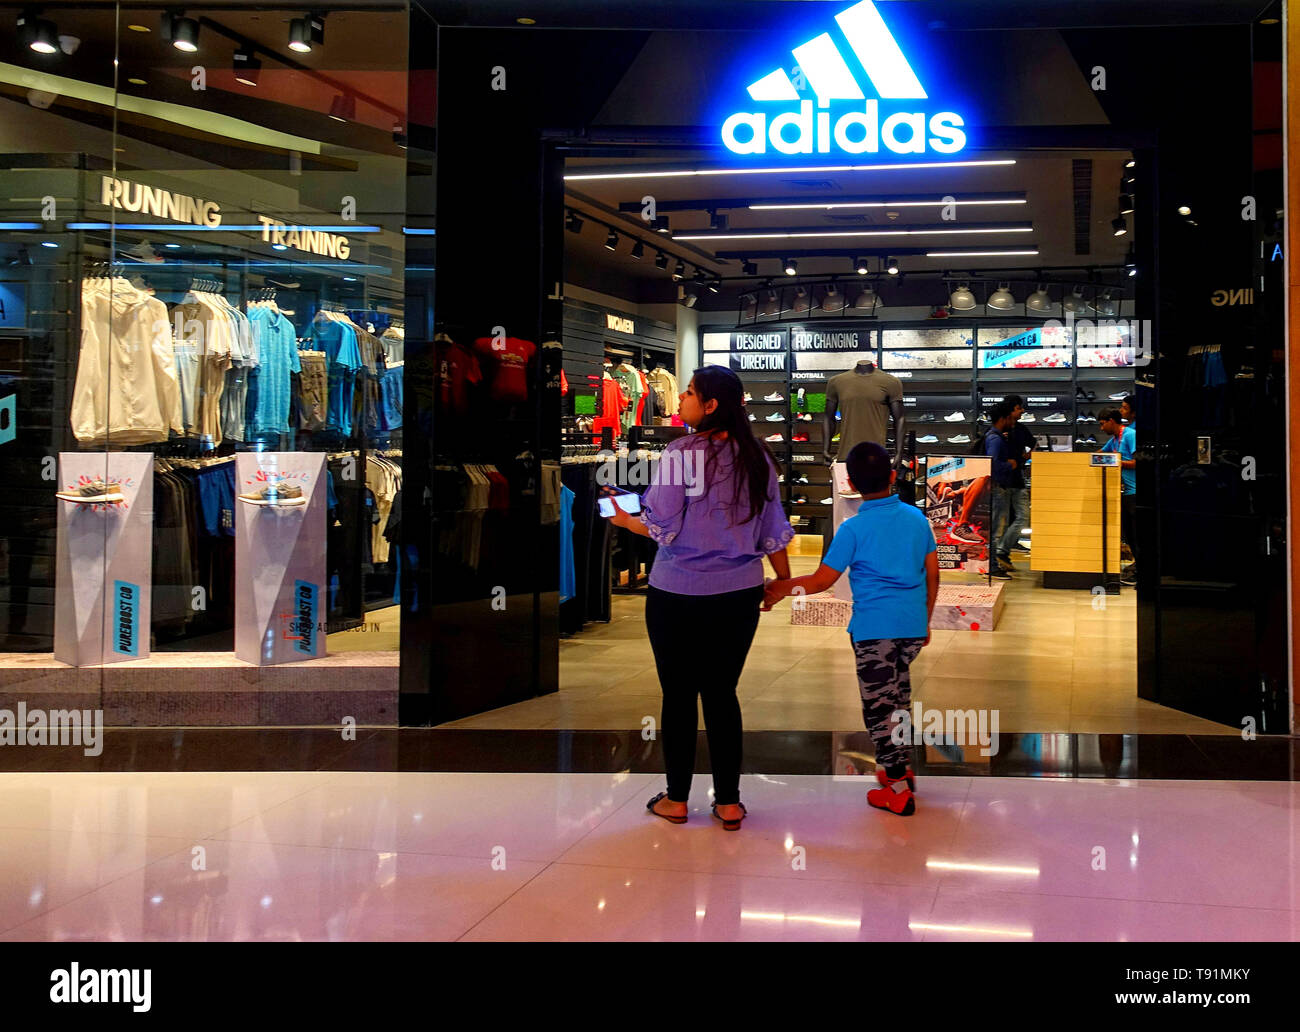 adidas south city mall